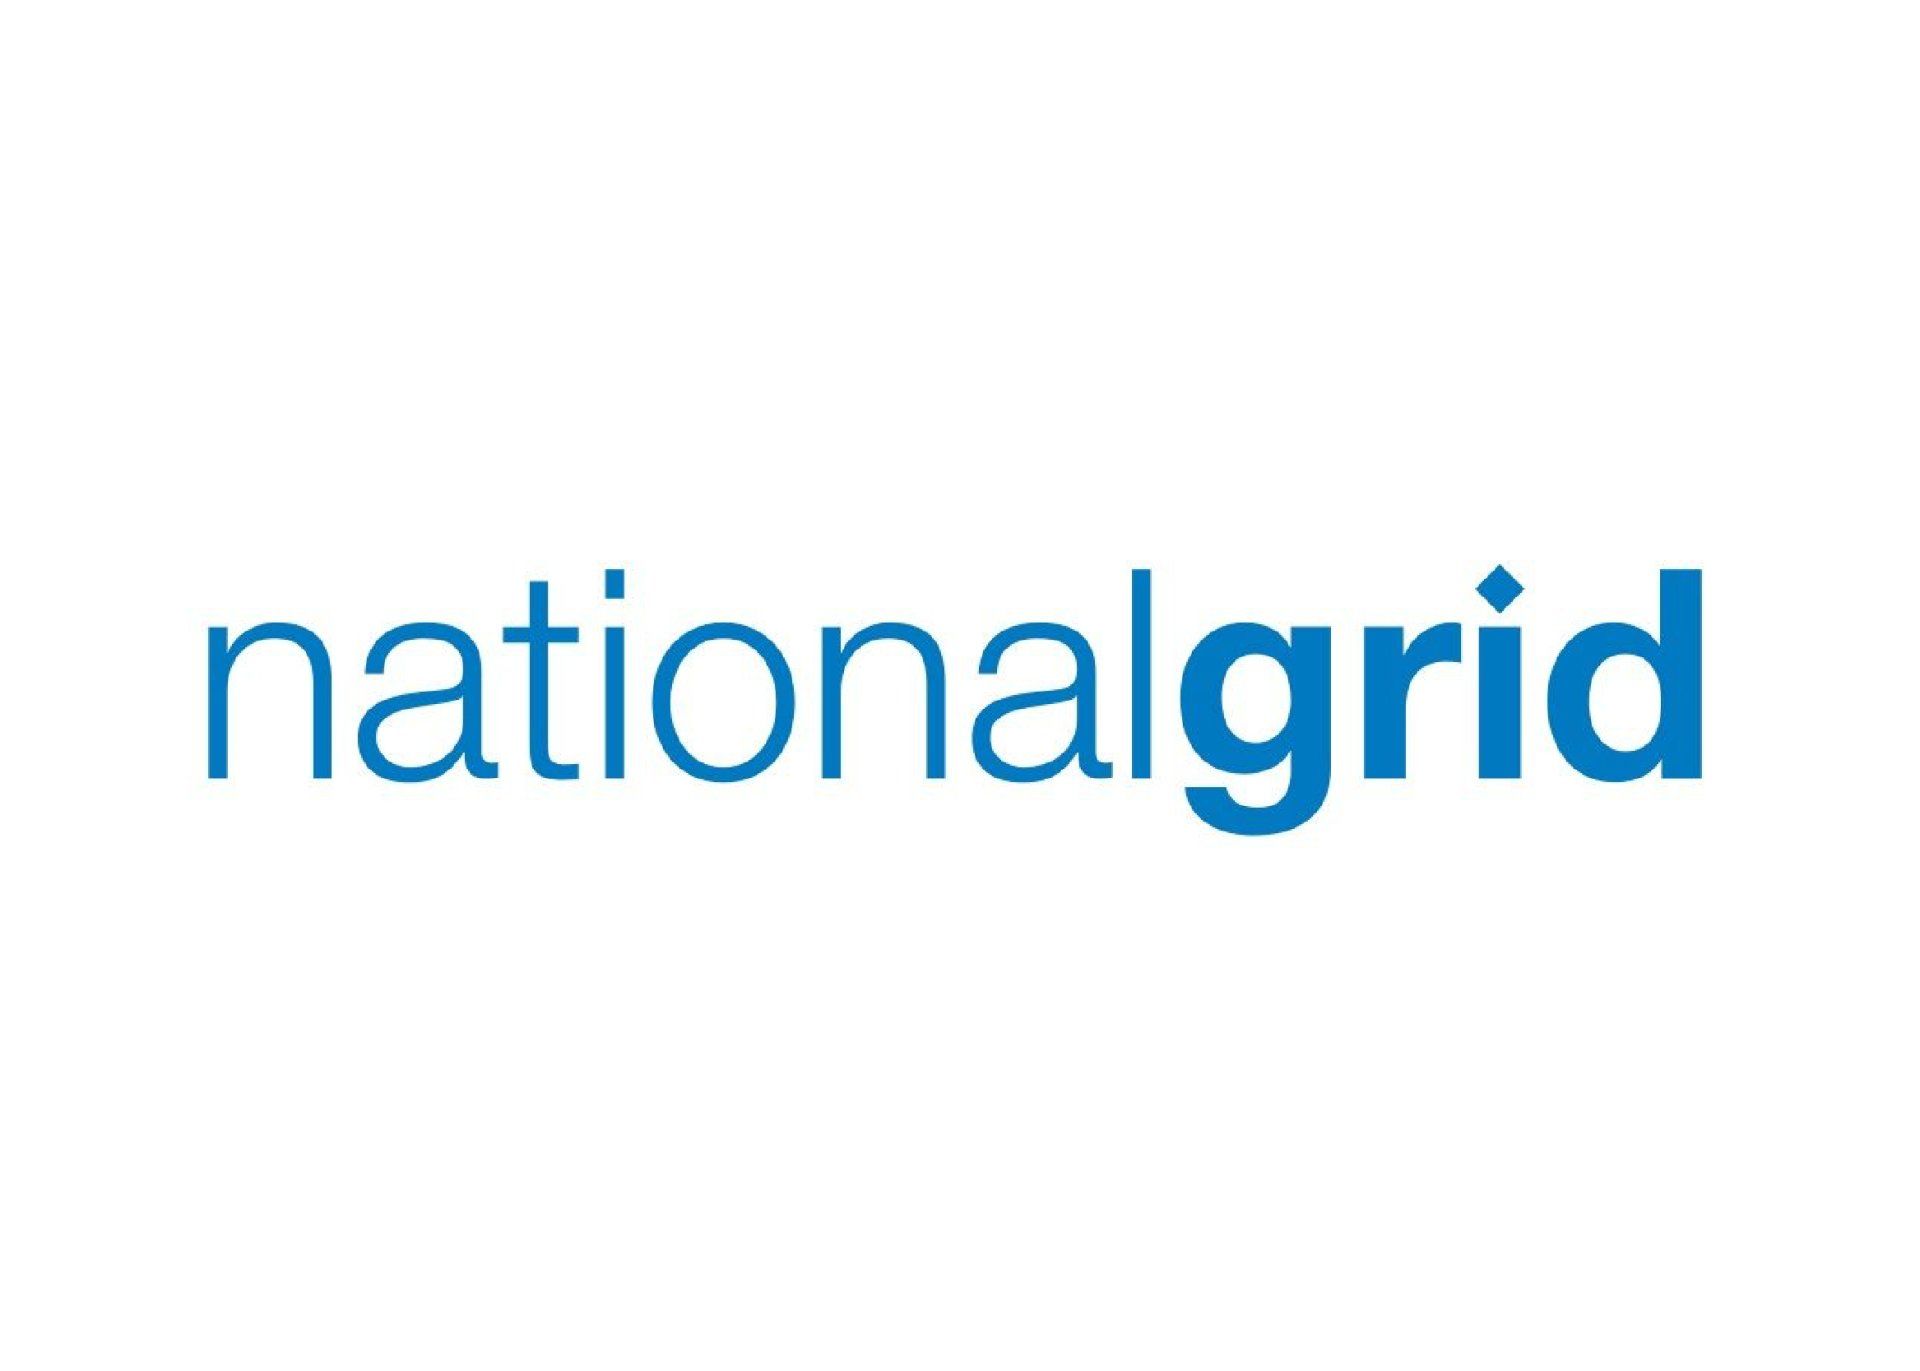 national-grid-logo